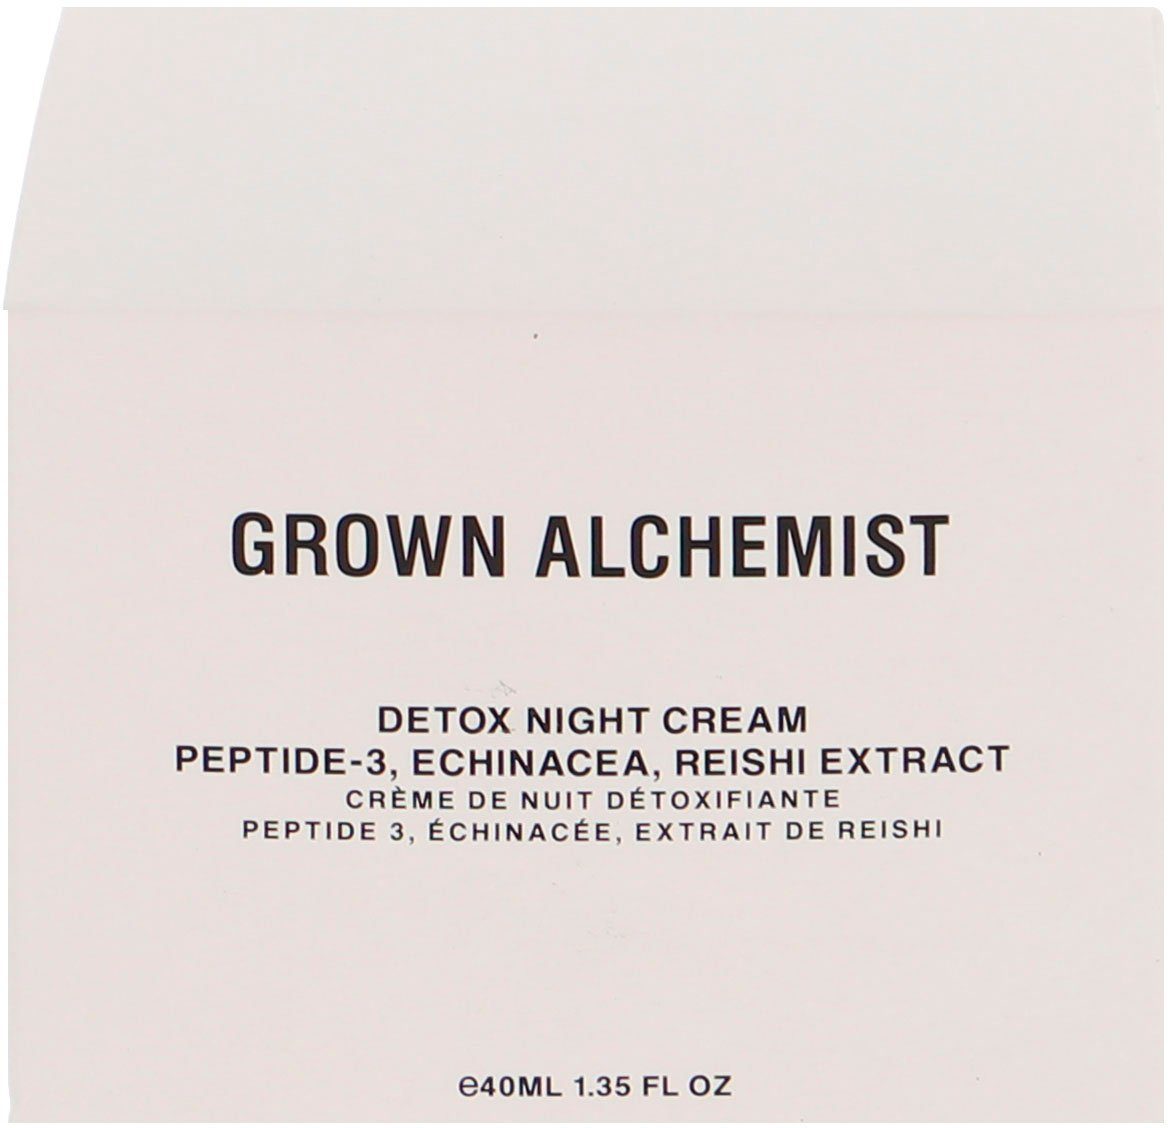 Extract Peptide-3, Nachtcreme Reishi GROWN Cream, Detox Echinacea, ALCHEMIST Night